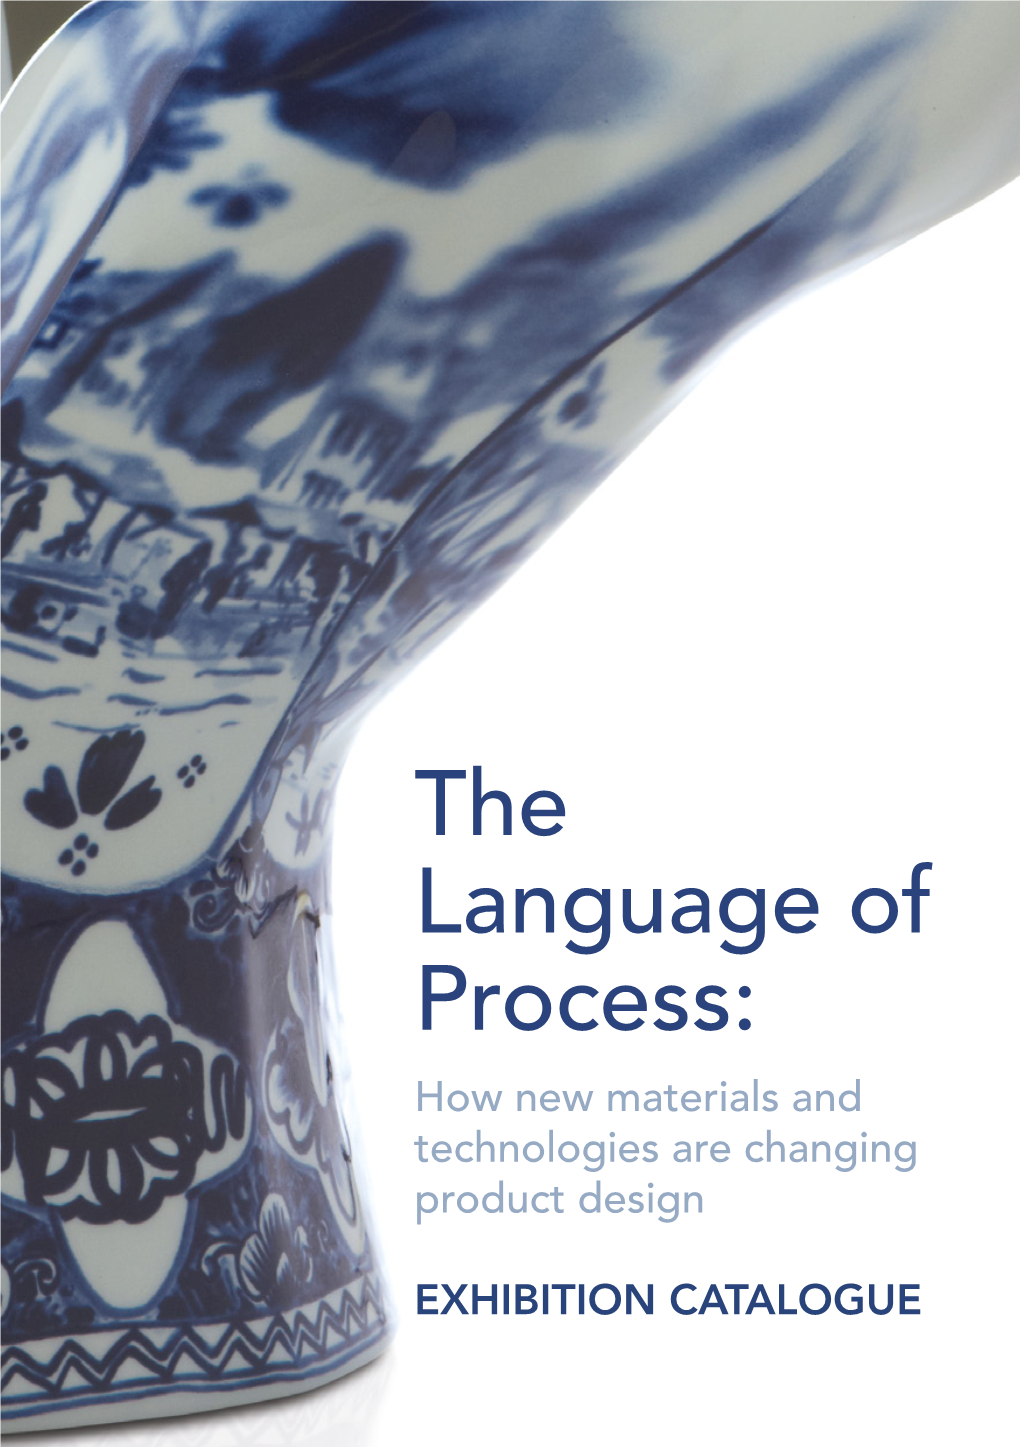 The Language of Process